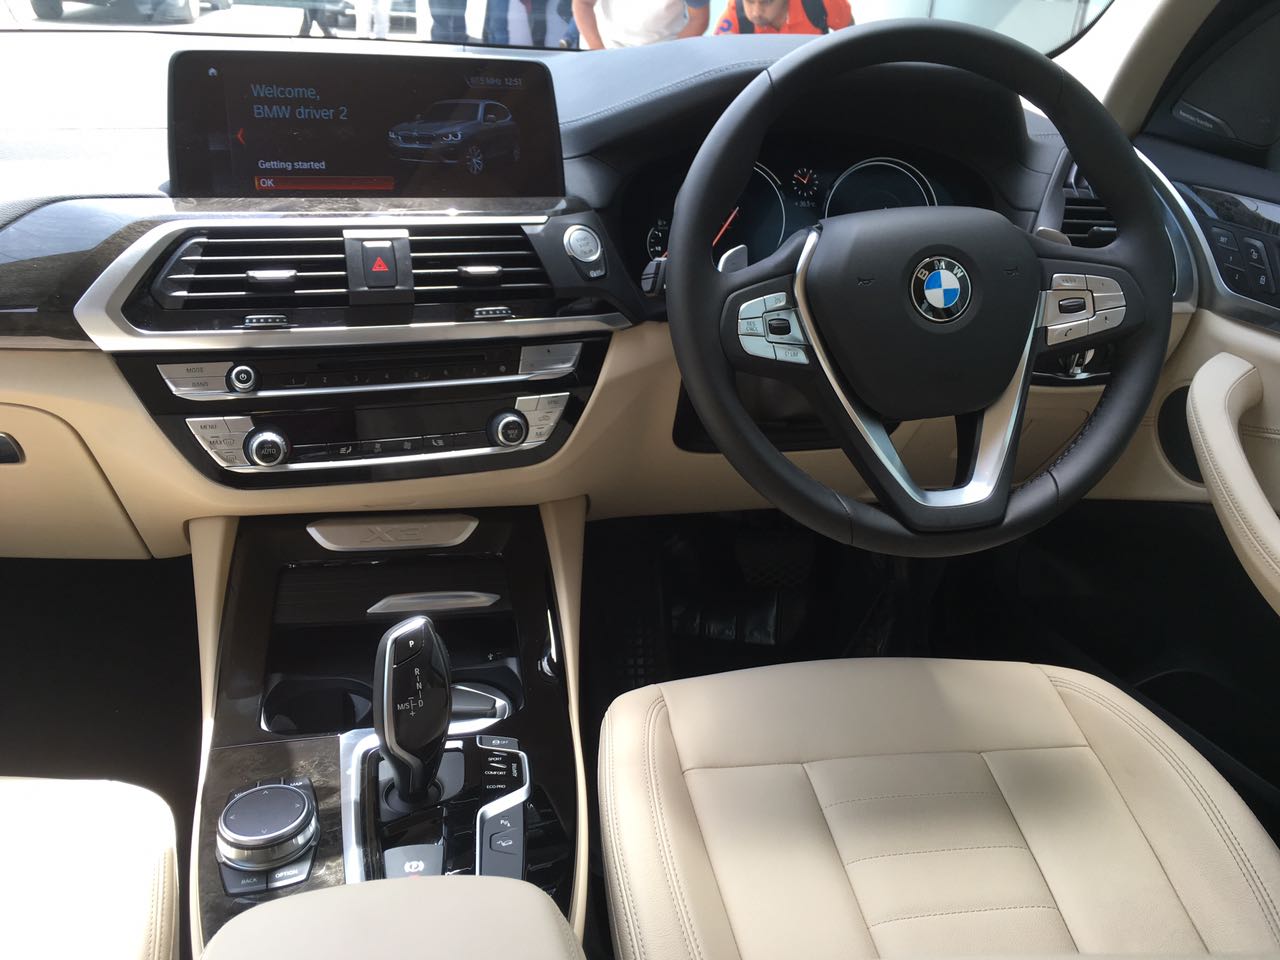 BMW X3 India